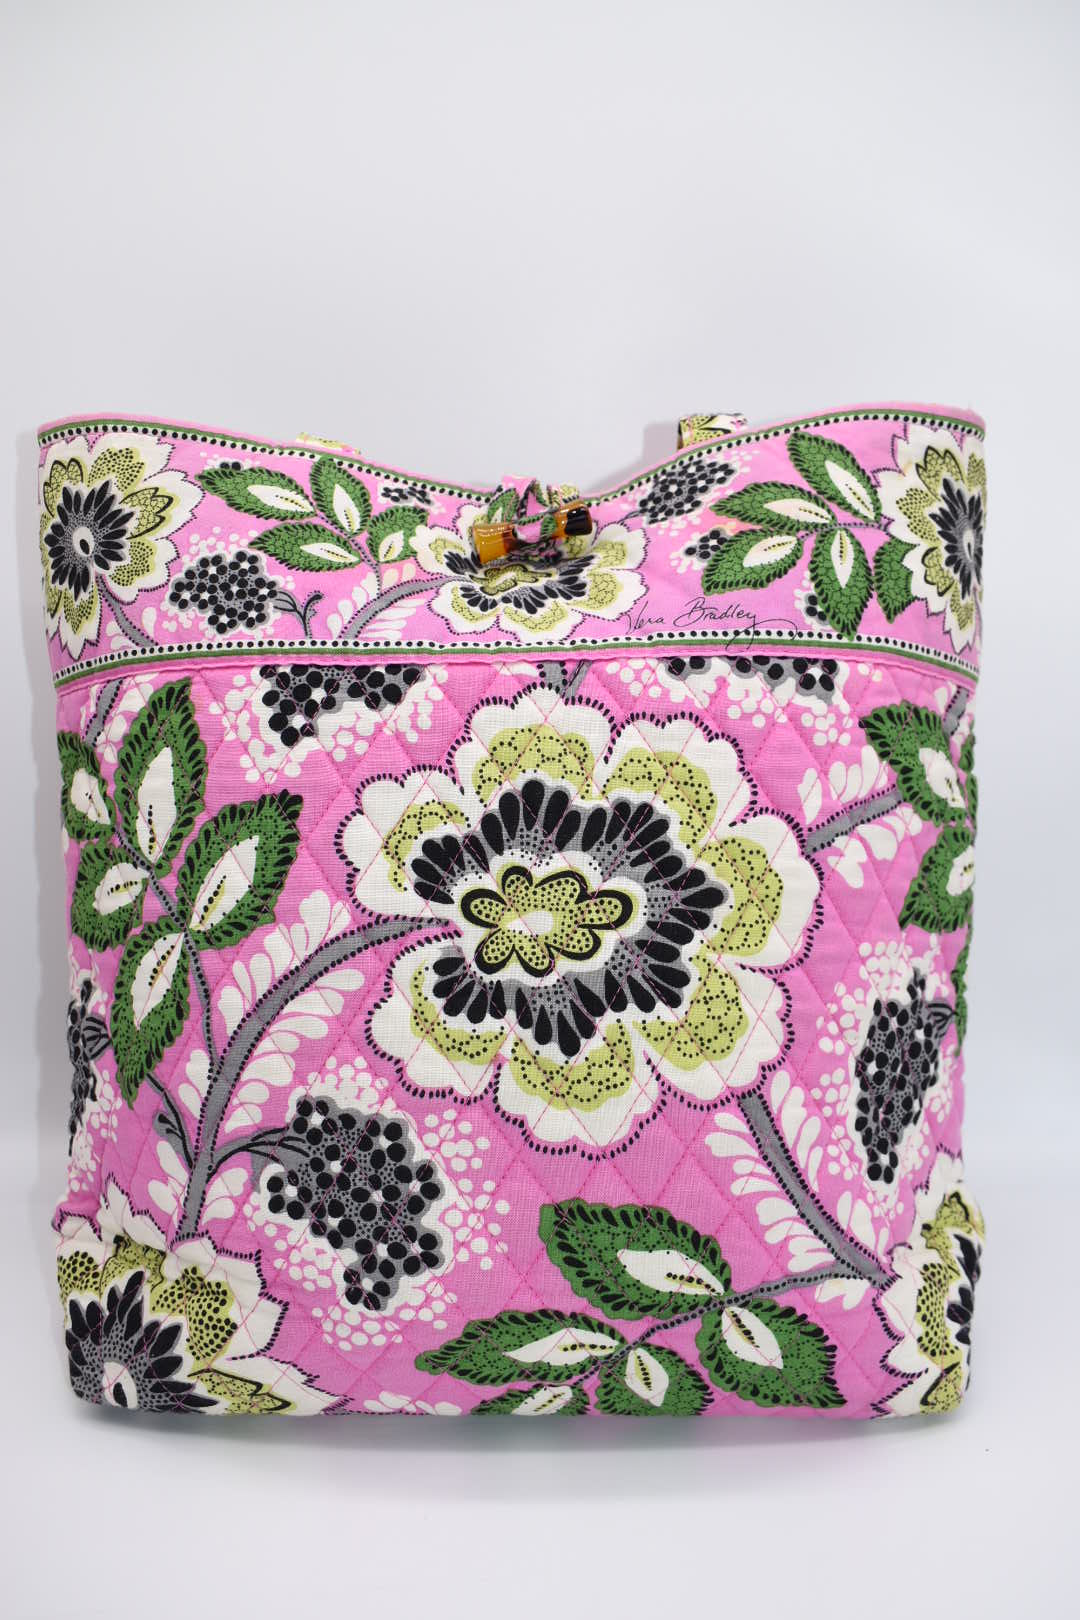 Vera Bradley Tote Bag in "Priscilla Pink" Pattern